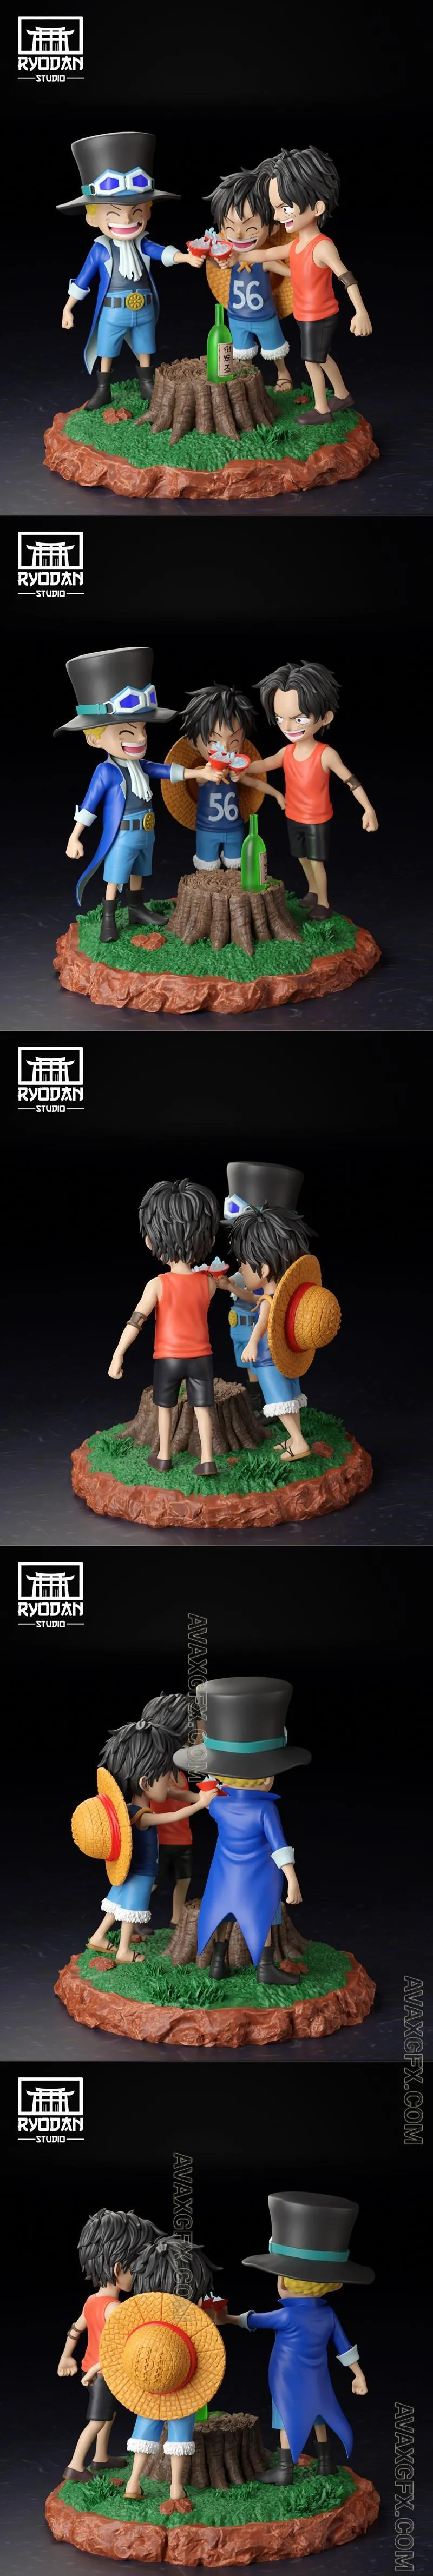 Ryodan Studio - Childhood Ace, Luffy and Sabo - STL 3D Model